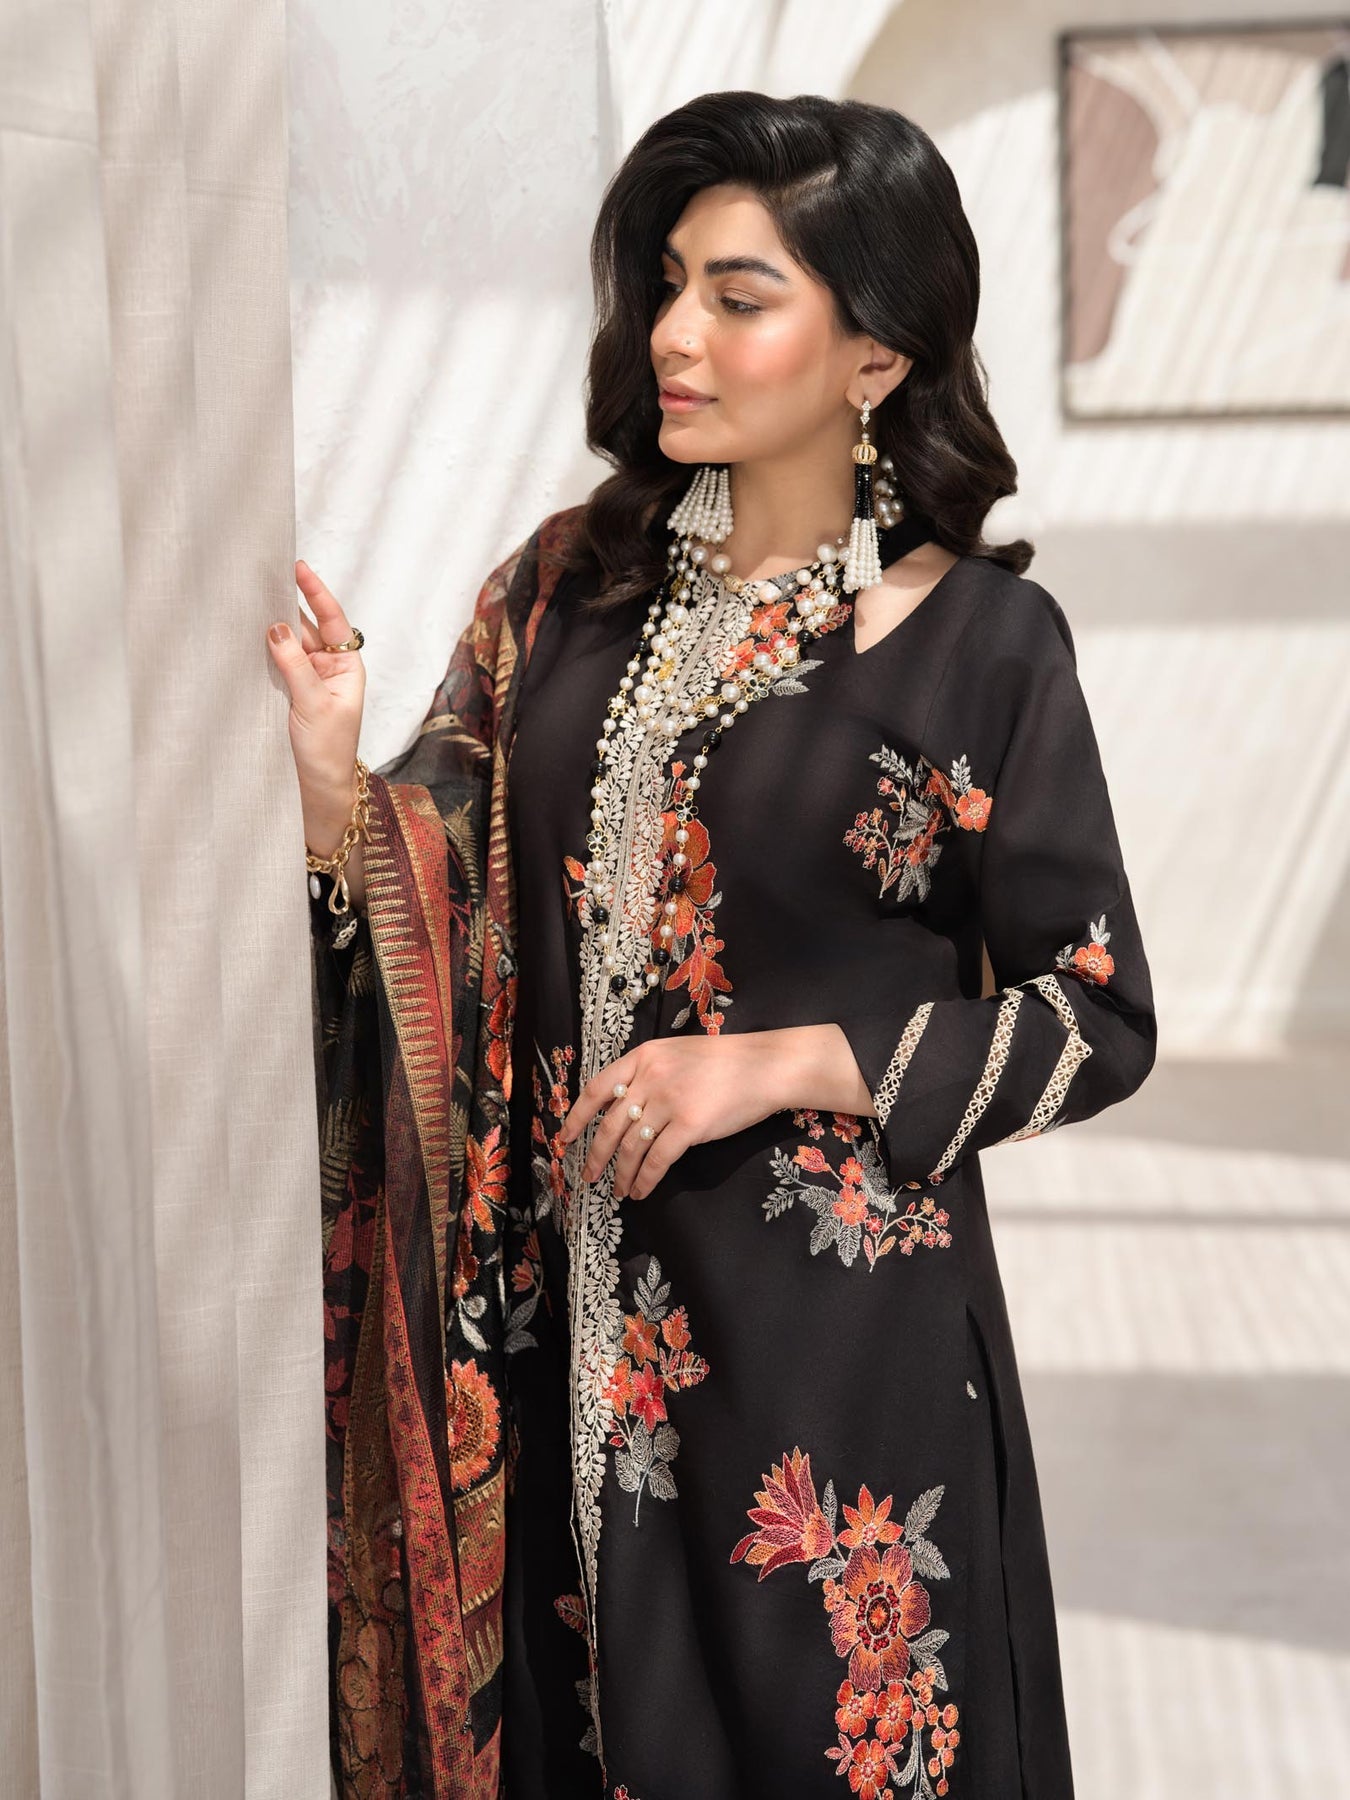 Taanabaana | Mem Saab Collection | M3245 - Khanumjan  Pakistani Clothes and Designer Dresses in UK, USA 